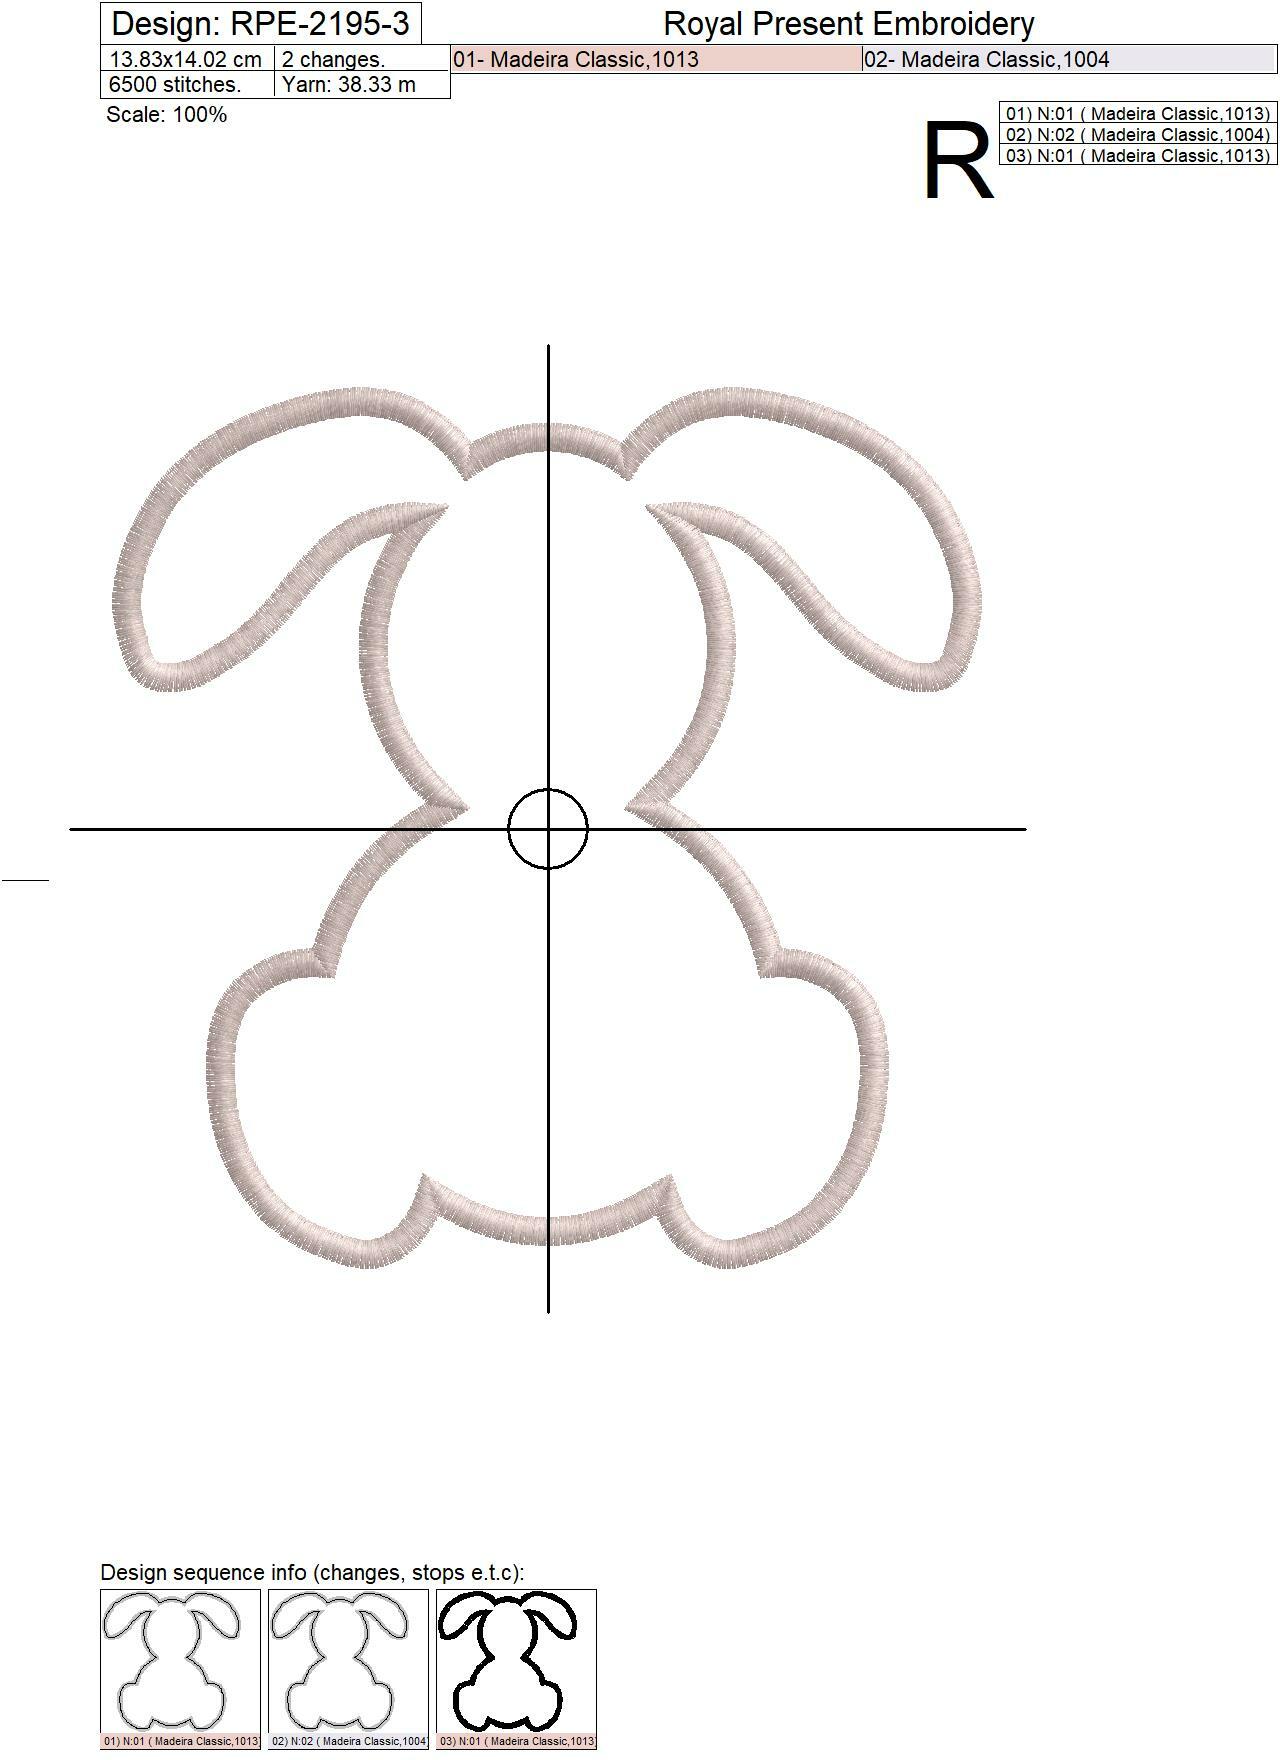 Bunny Applique Digital Embroidery Design - 6 sizes | Royal Present ...